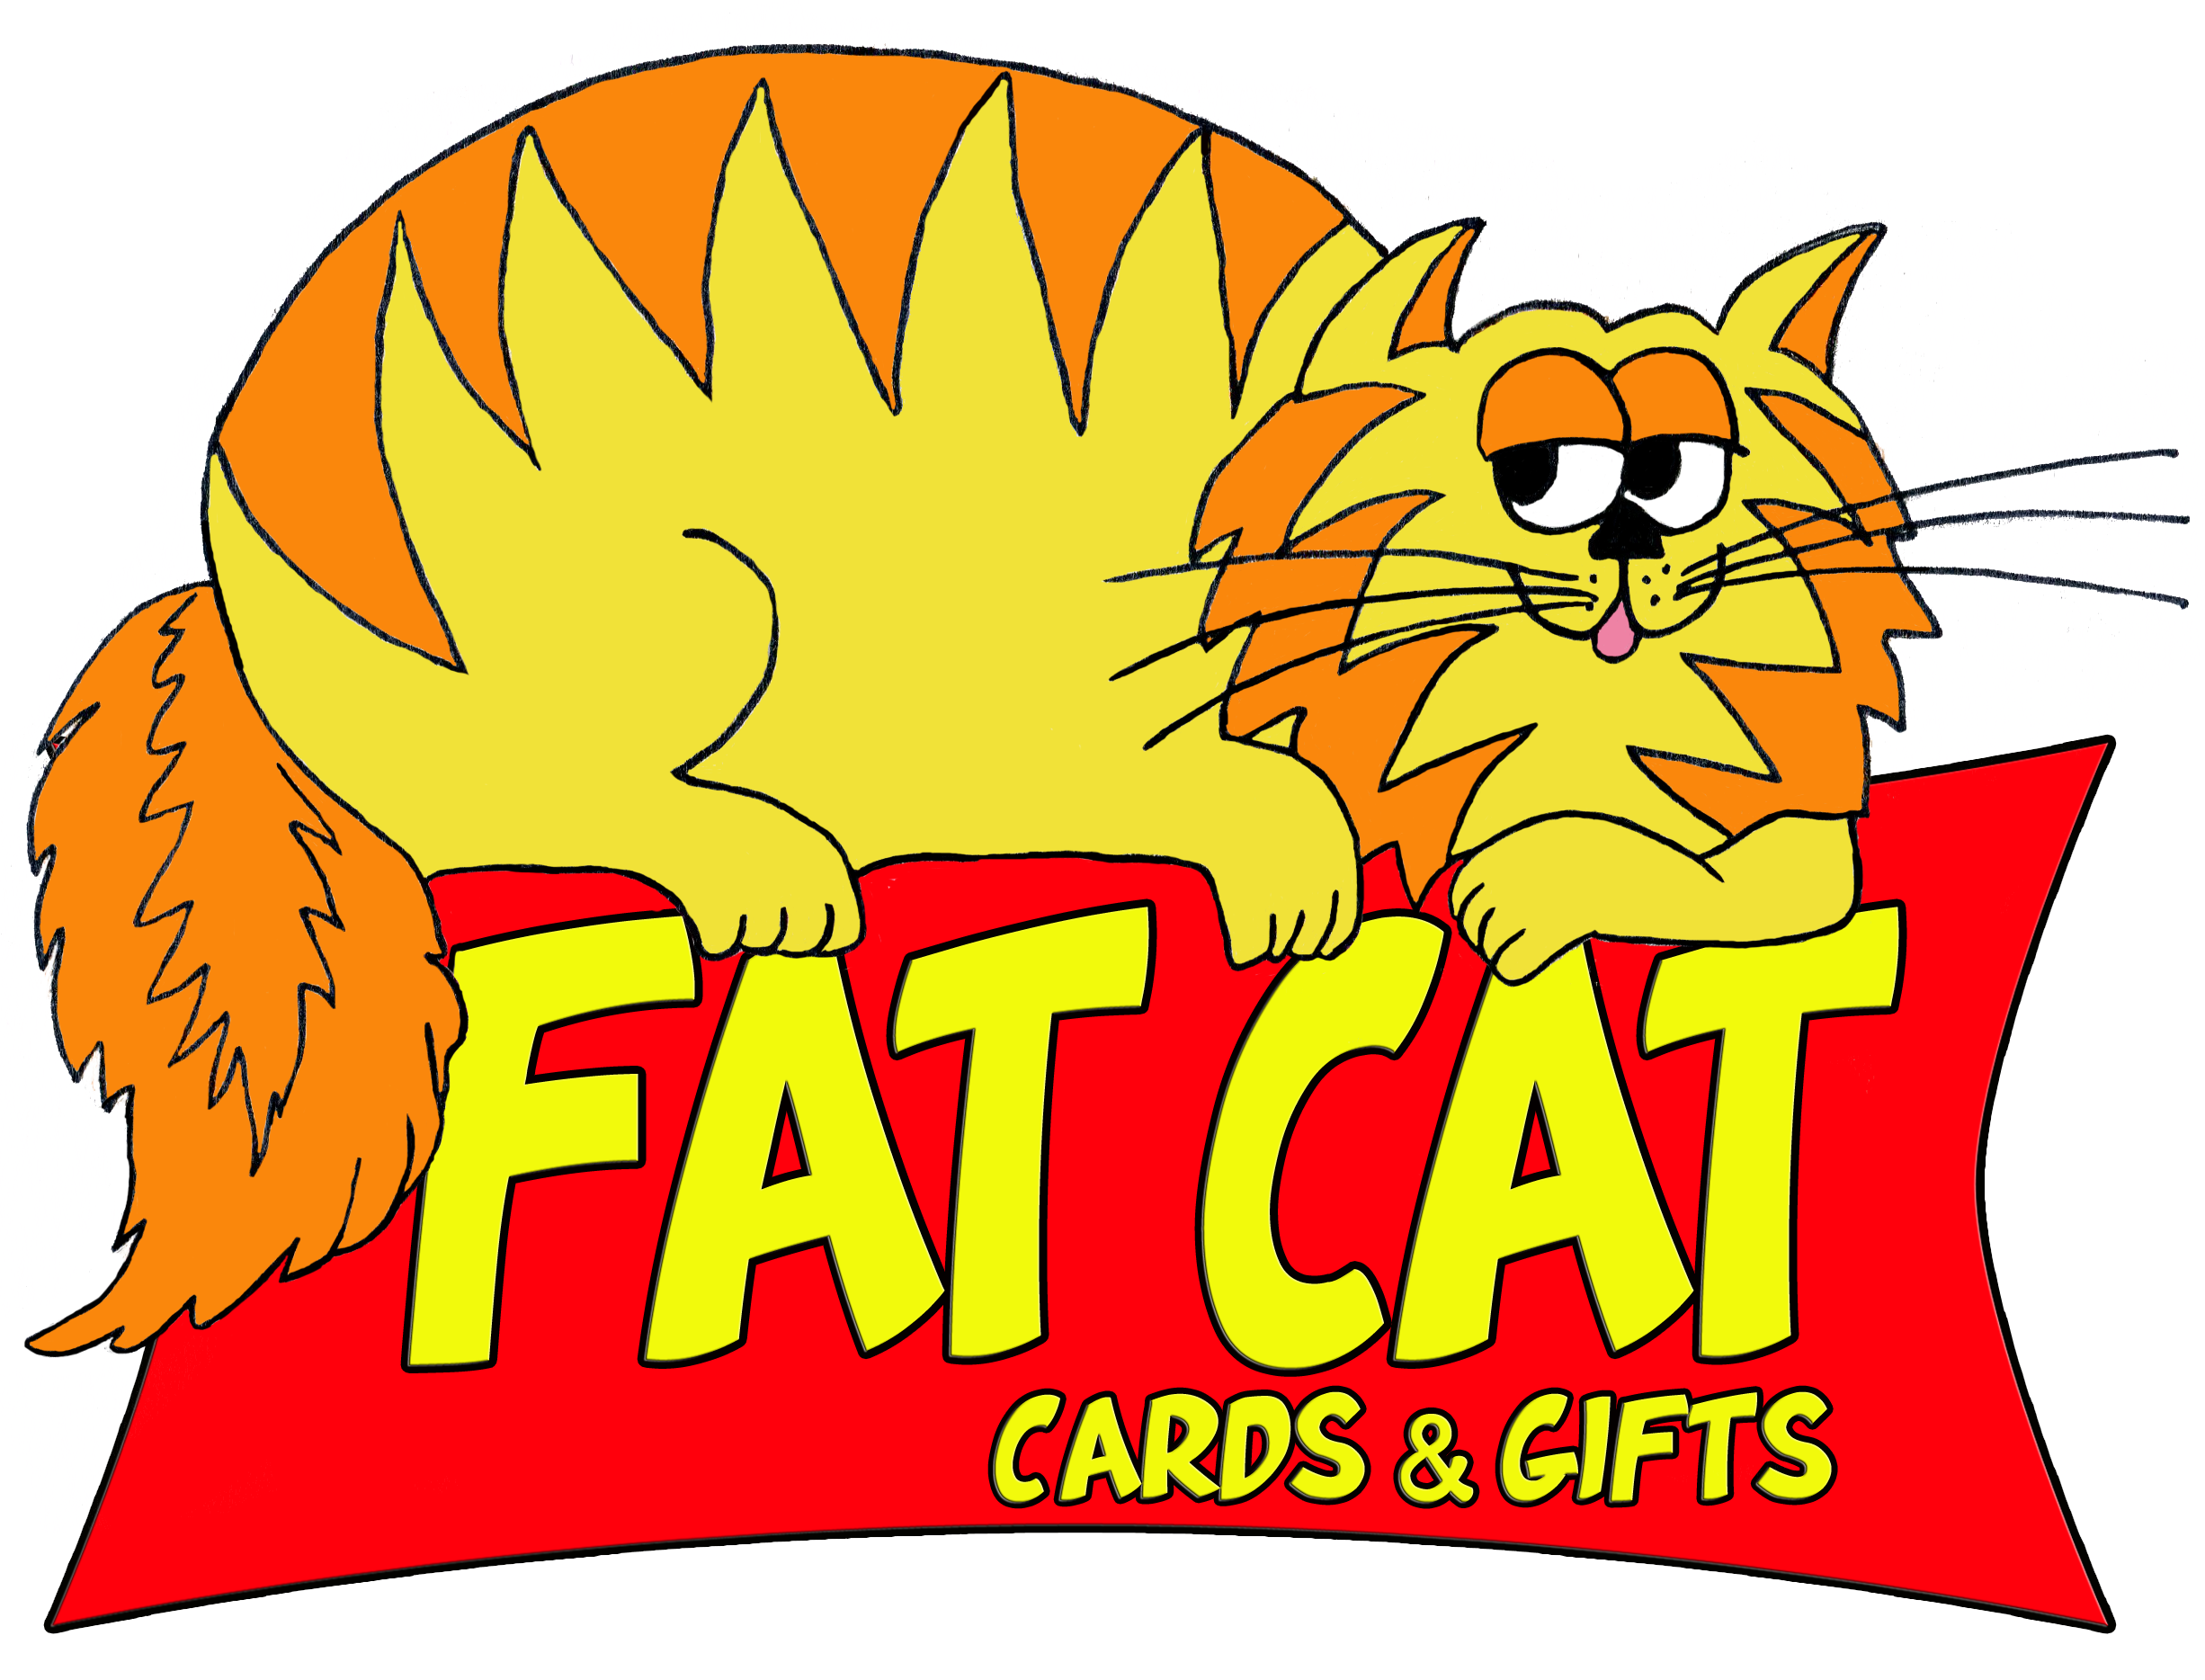 Fat Cat Cards